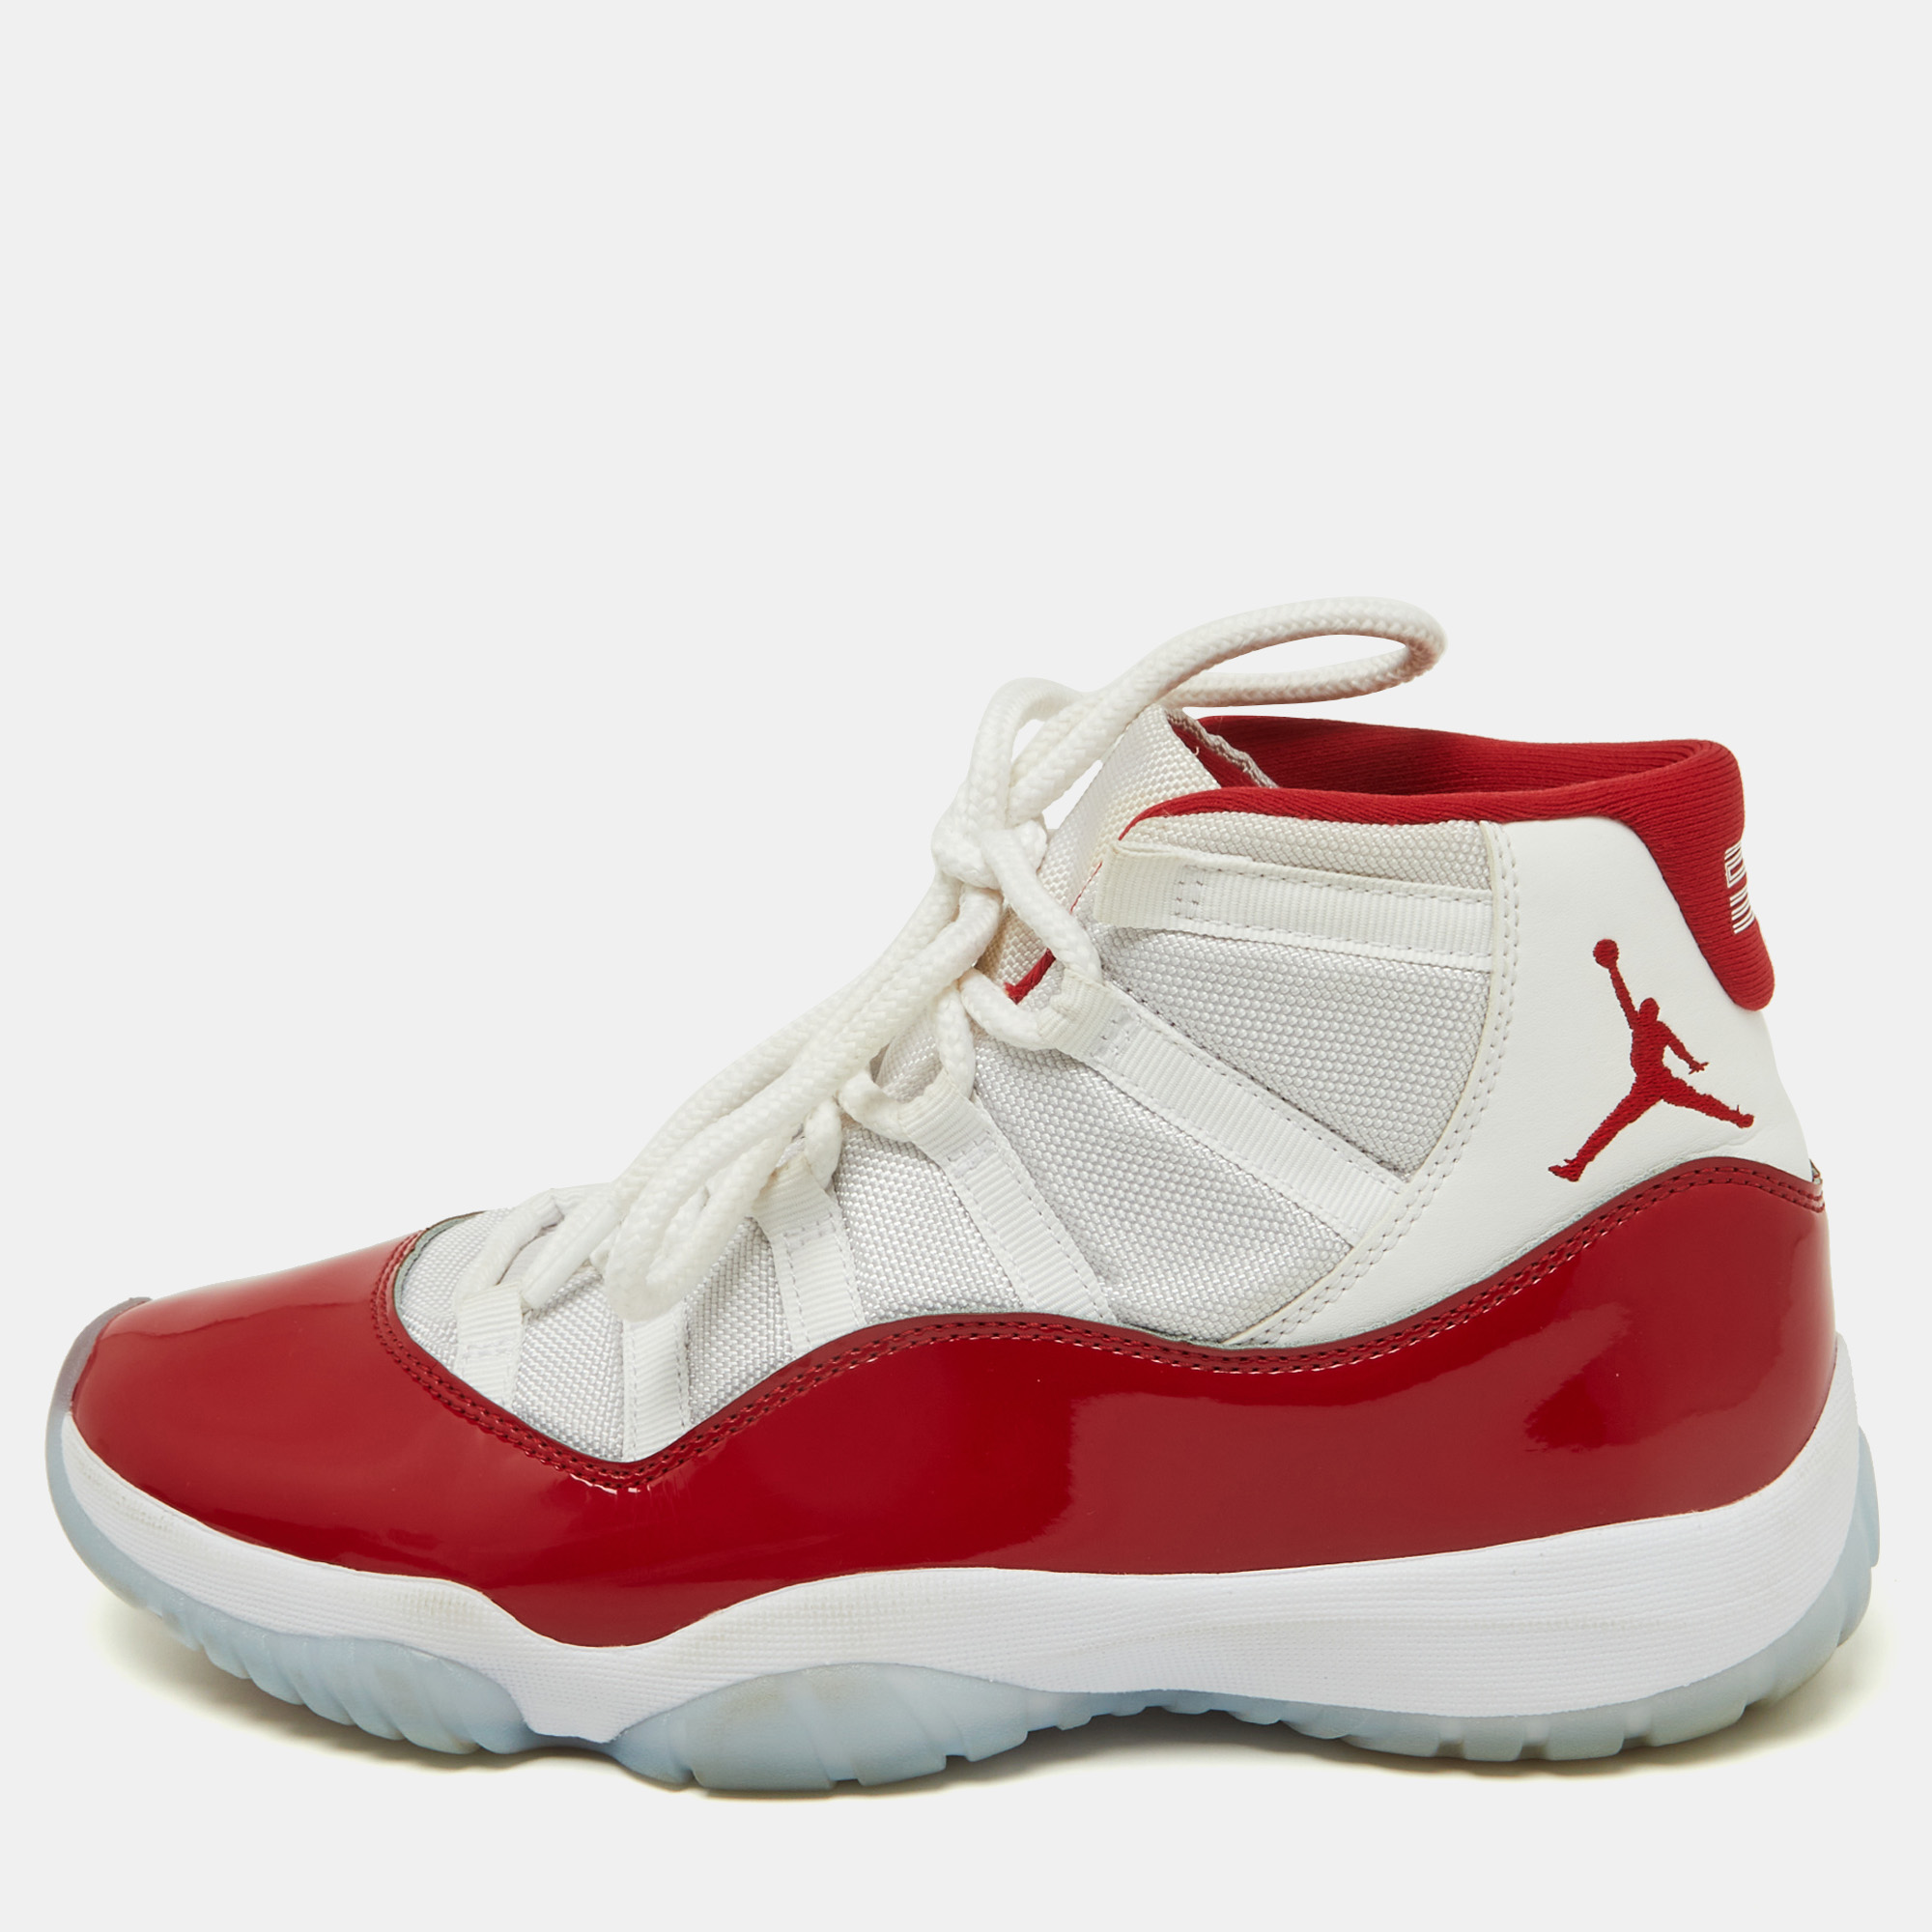 

Air Jordans Red Patent Leather Jordan 11 Retro Cherry Sneakers Size 43